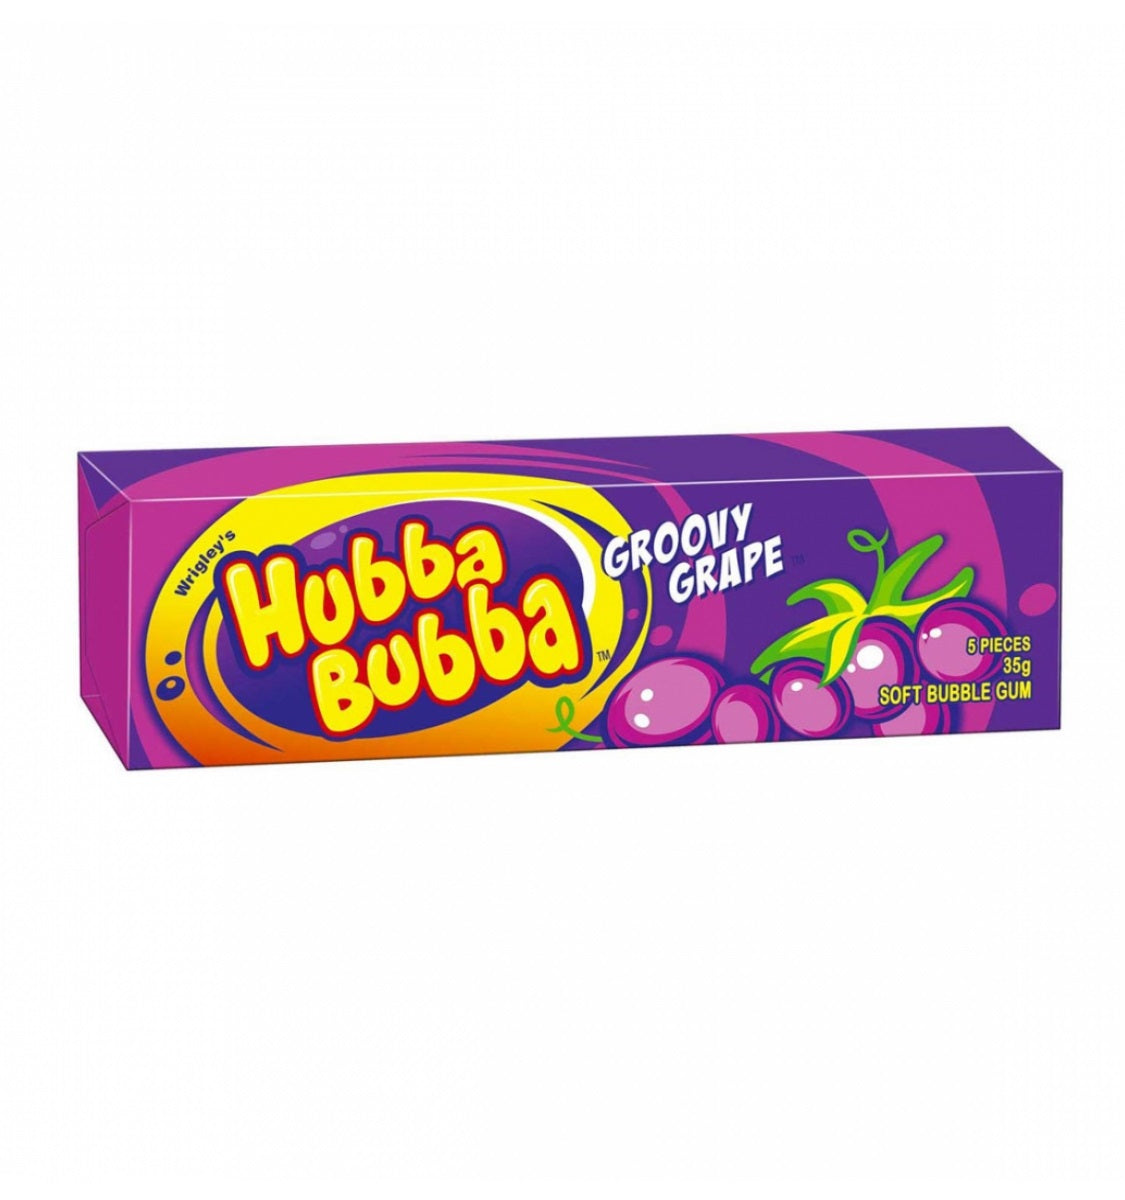 Wrigley's Hubba Bubba Grape